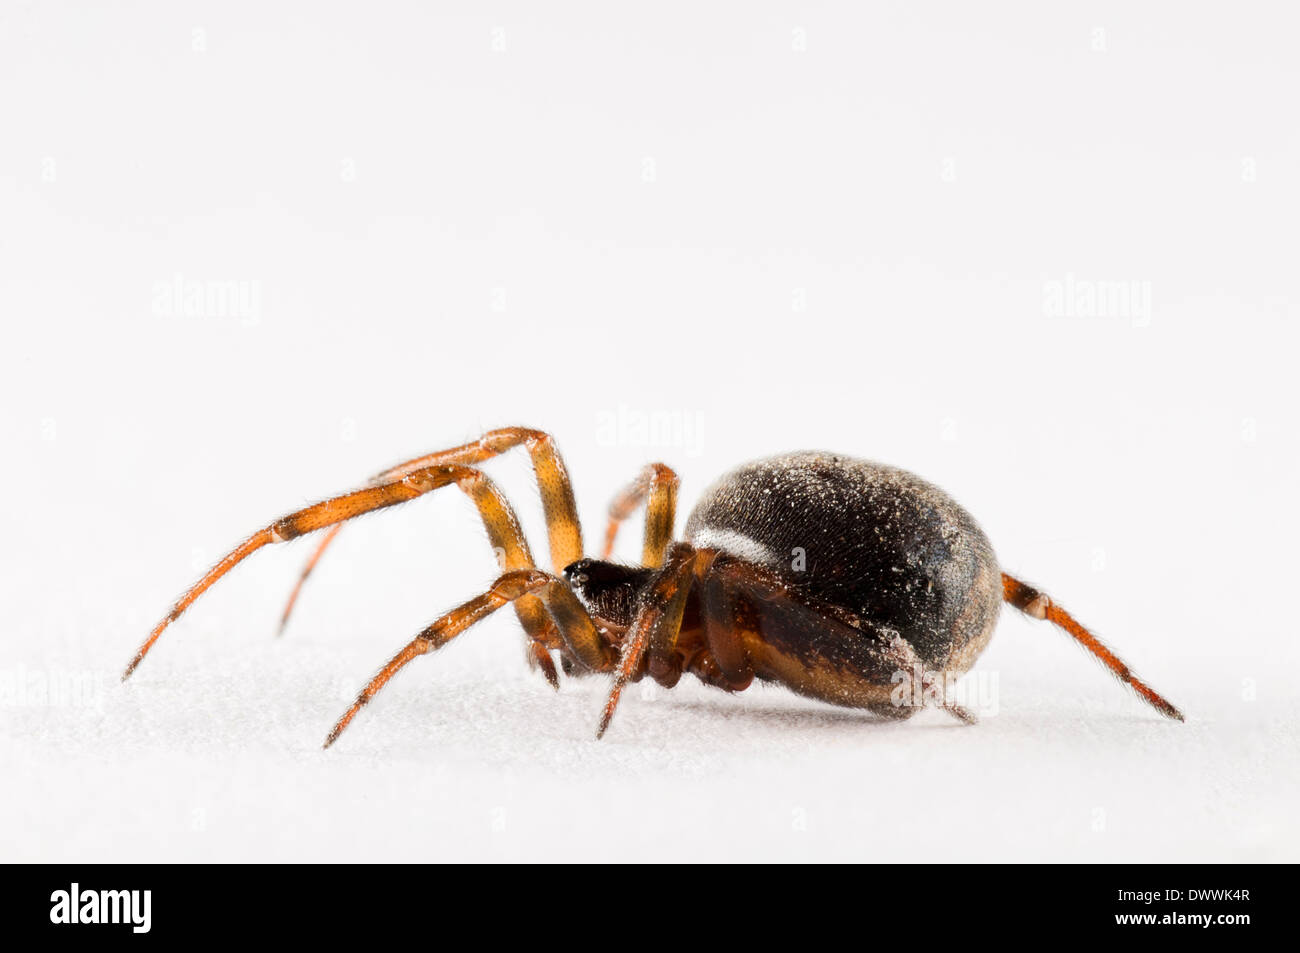 Comune vedova false, aka rabbit hutch spider (Steatoda bipunctata), femmina adulta fotografati contro uno sfondo bianco Foto Stock